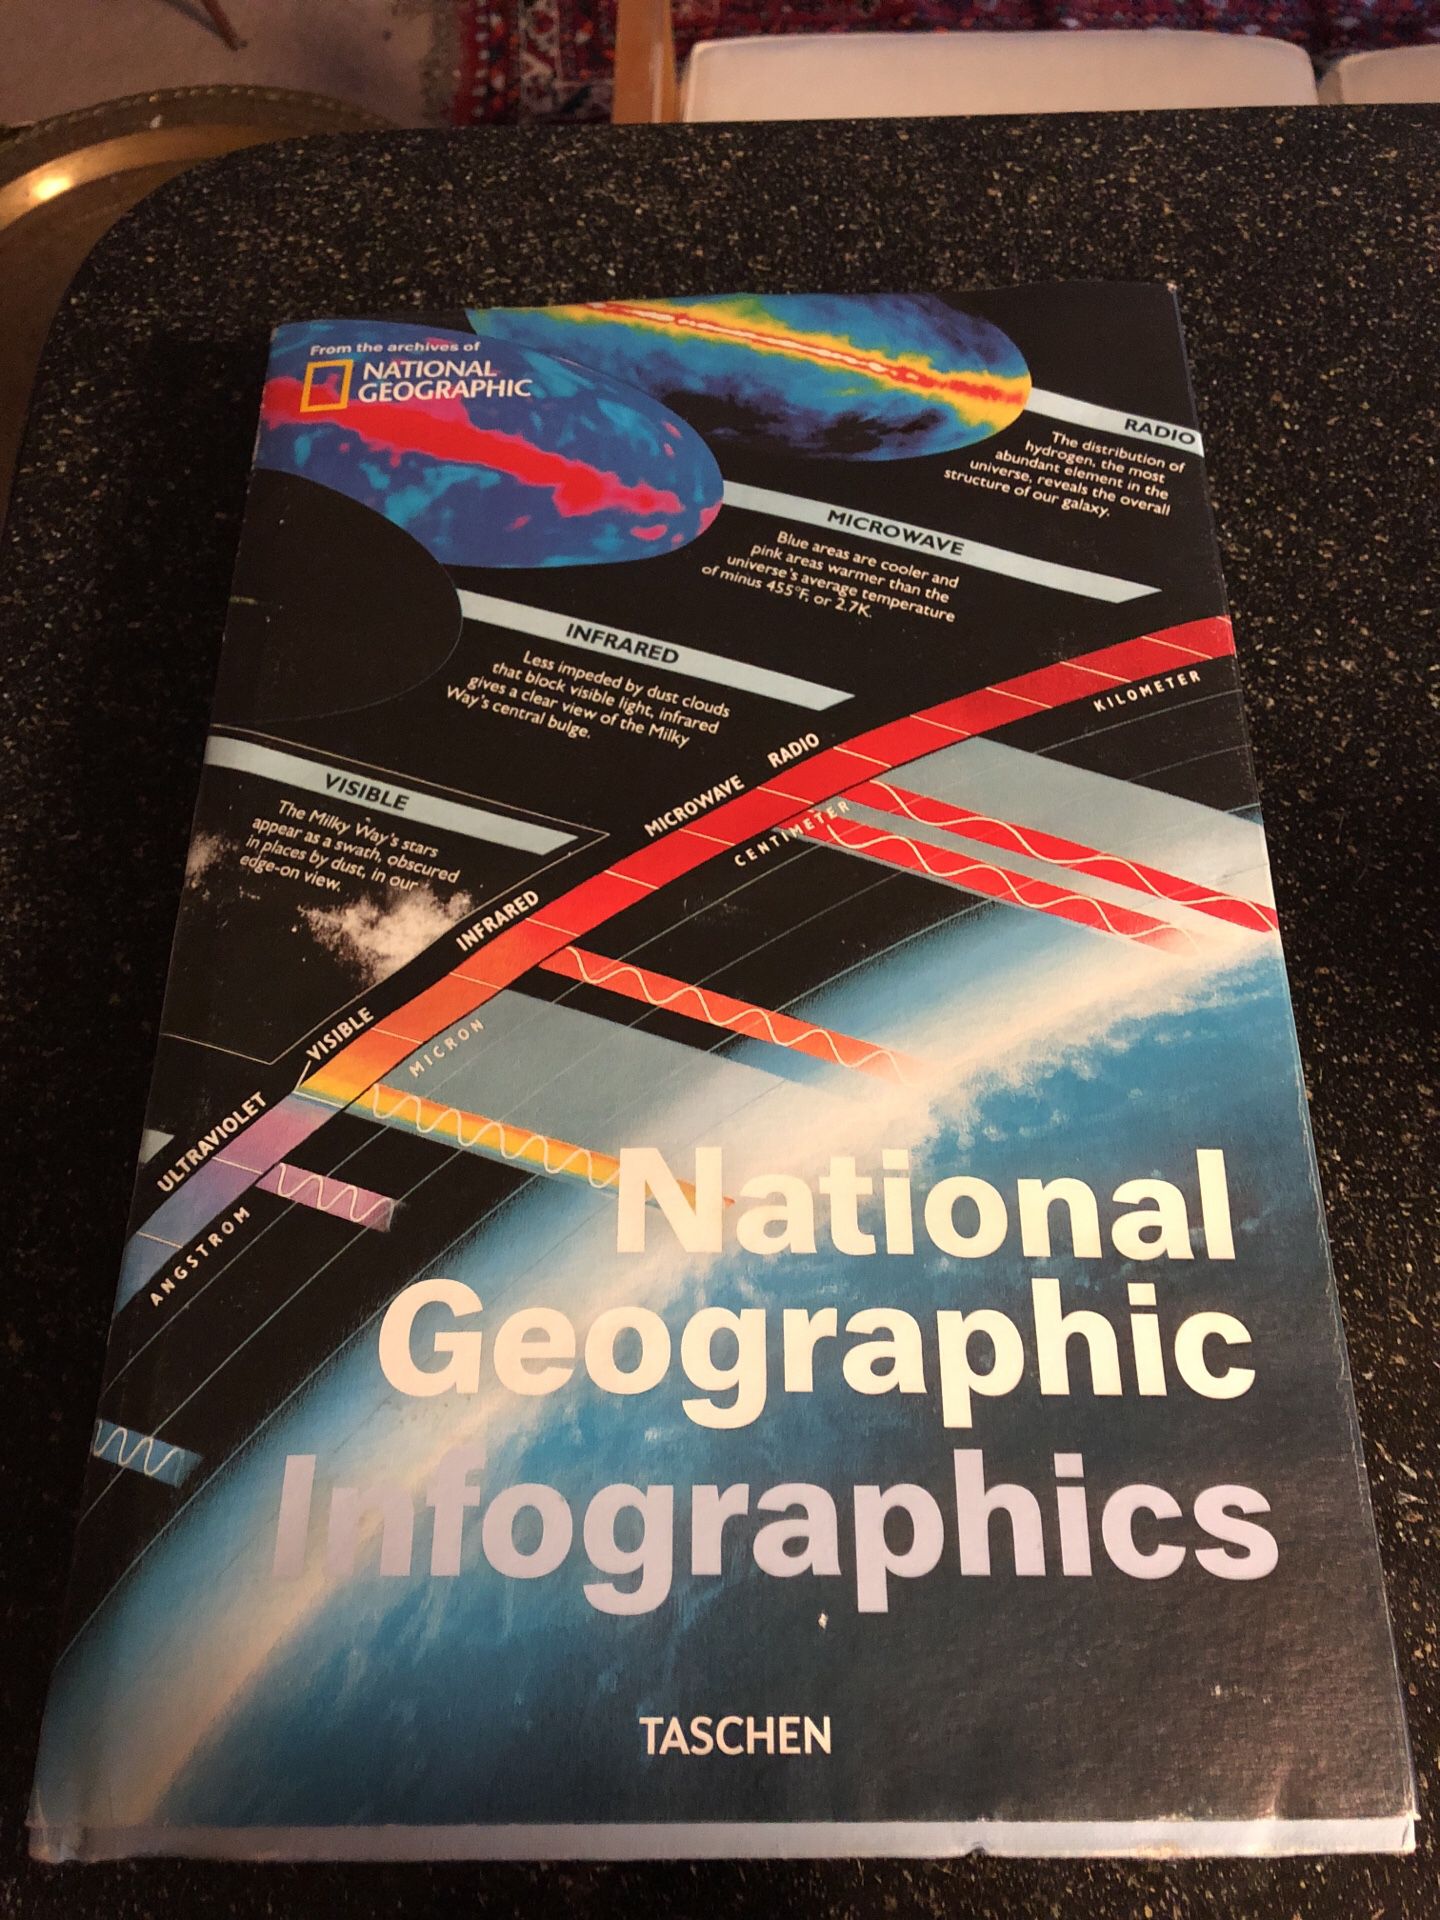 Infographics book